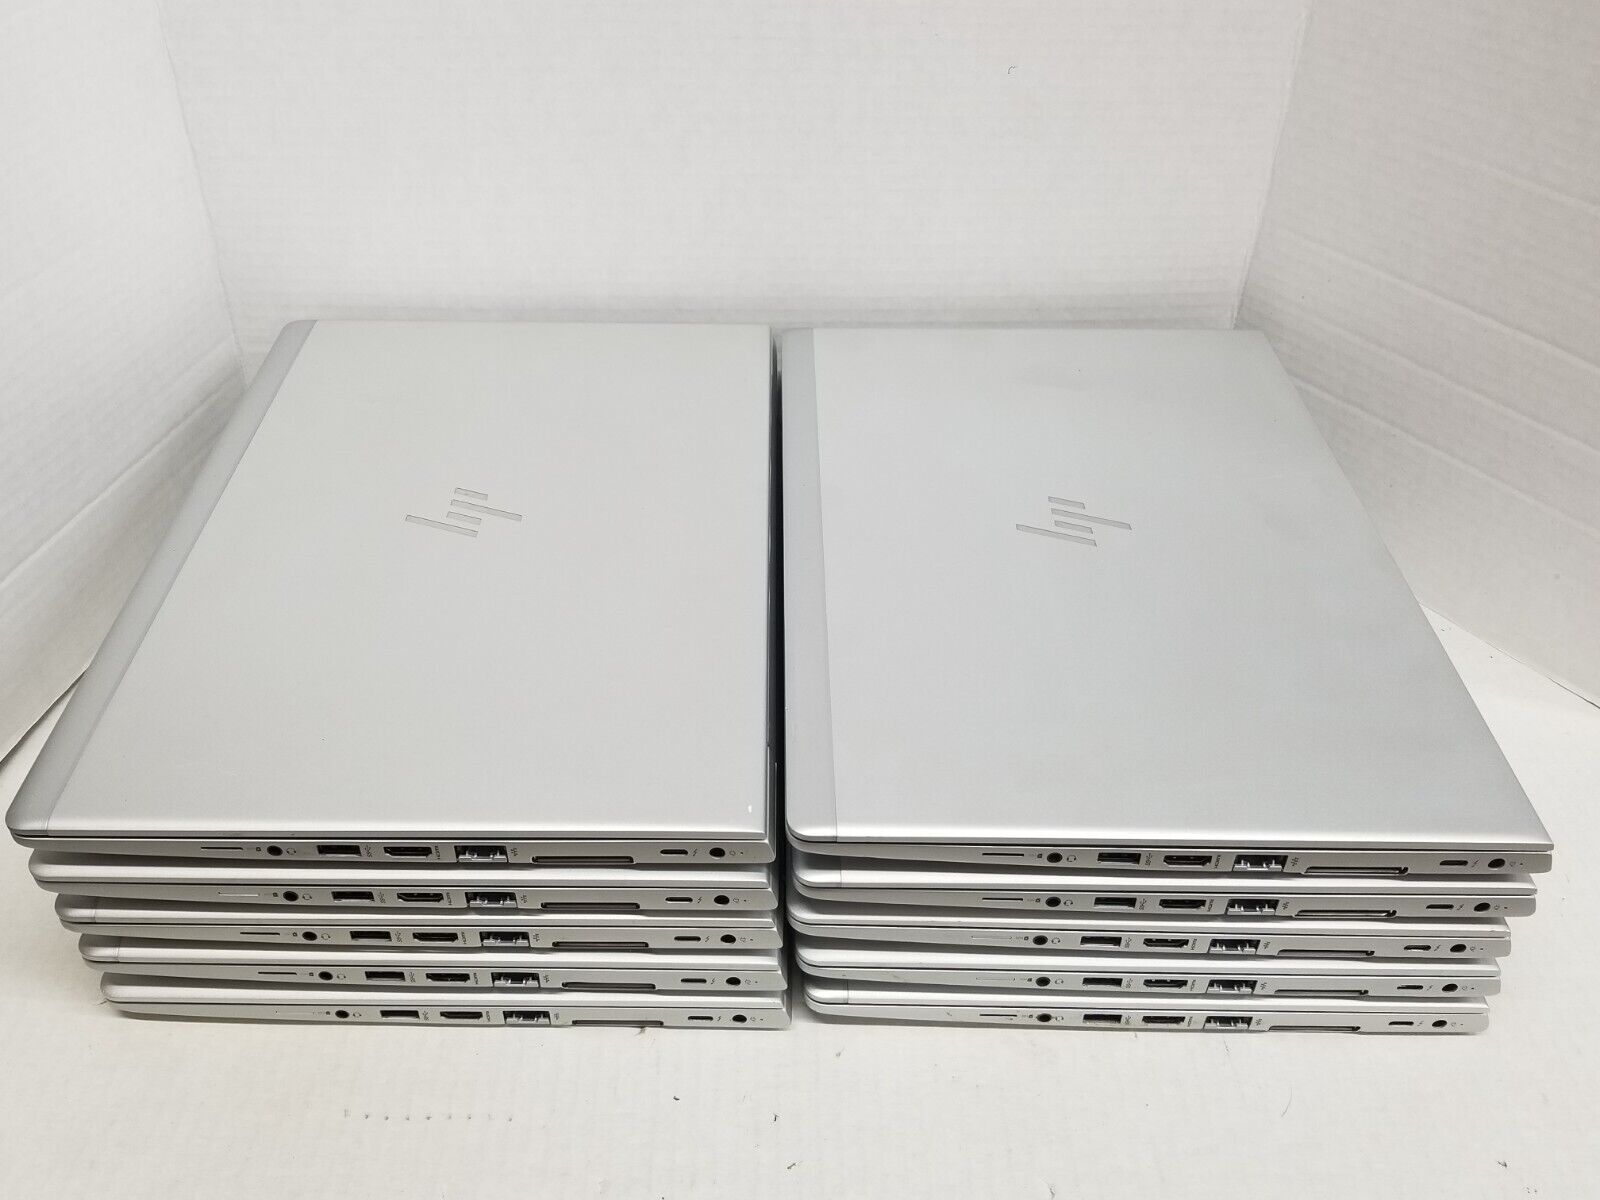 Lot of 10 HP EliteBook 840 G6 Laptops 14'' i5 16GB 256GB SSD Webcam Backlit FHD